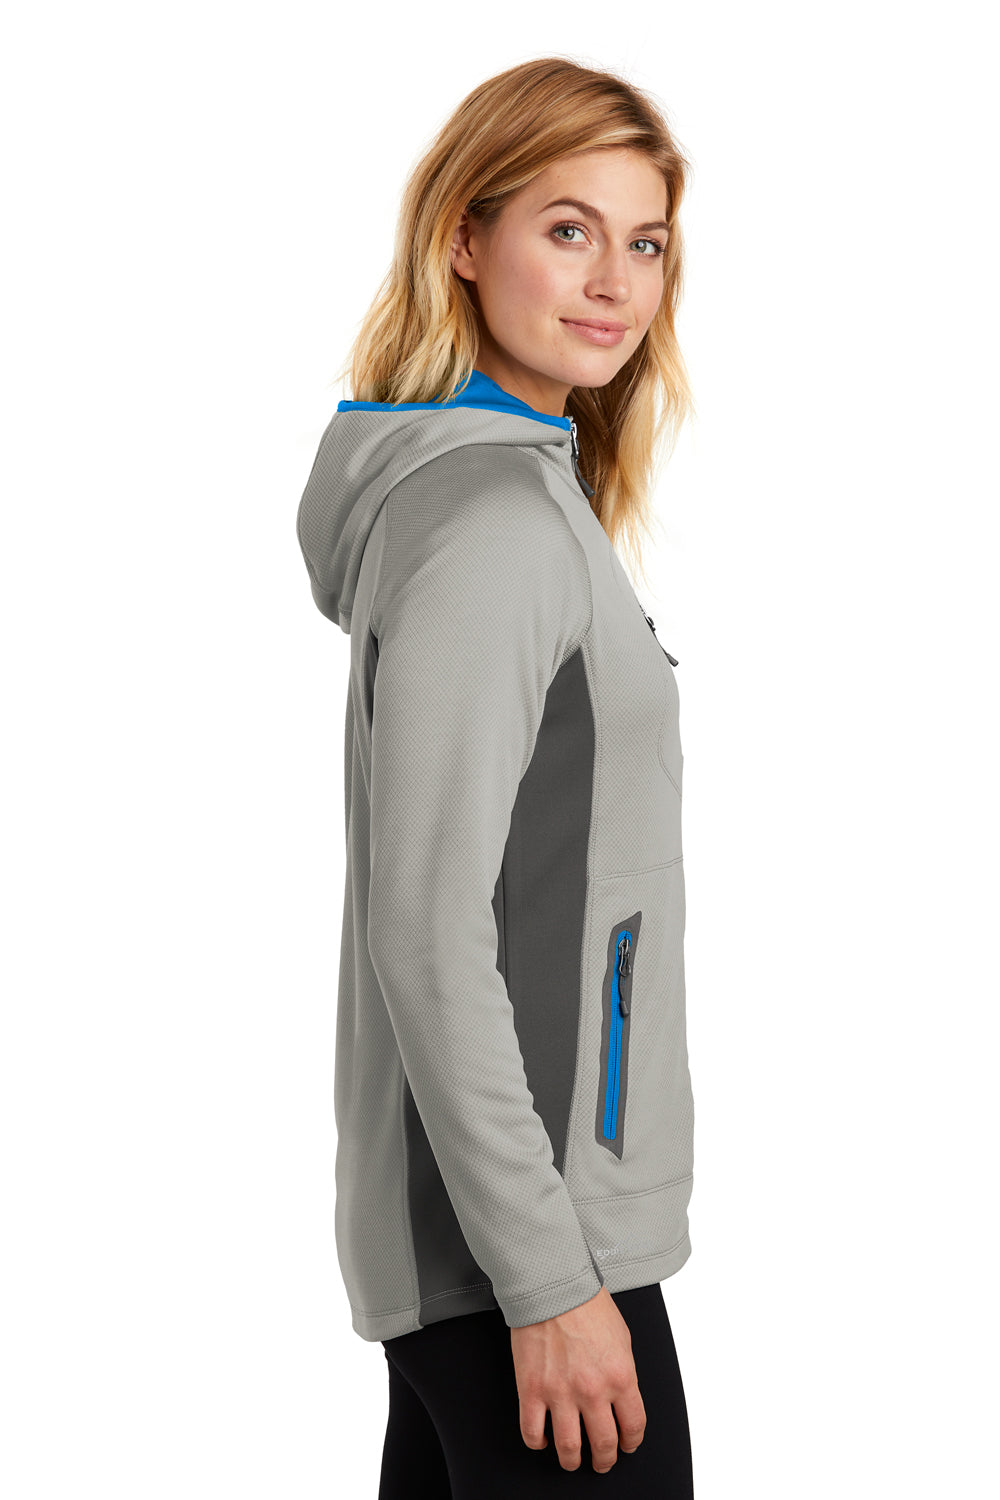 Eddie Bauer EB245 Womens Sport Full Zip Fleece Hooded Jacket Cloud Grey Side